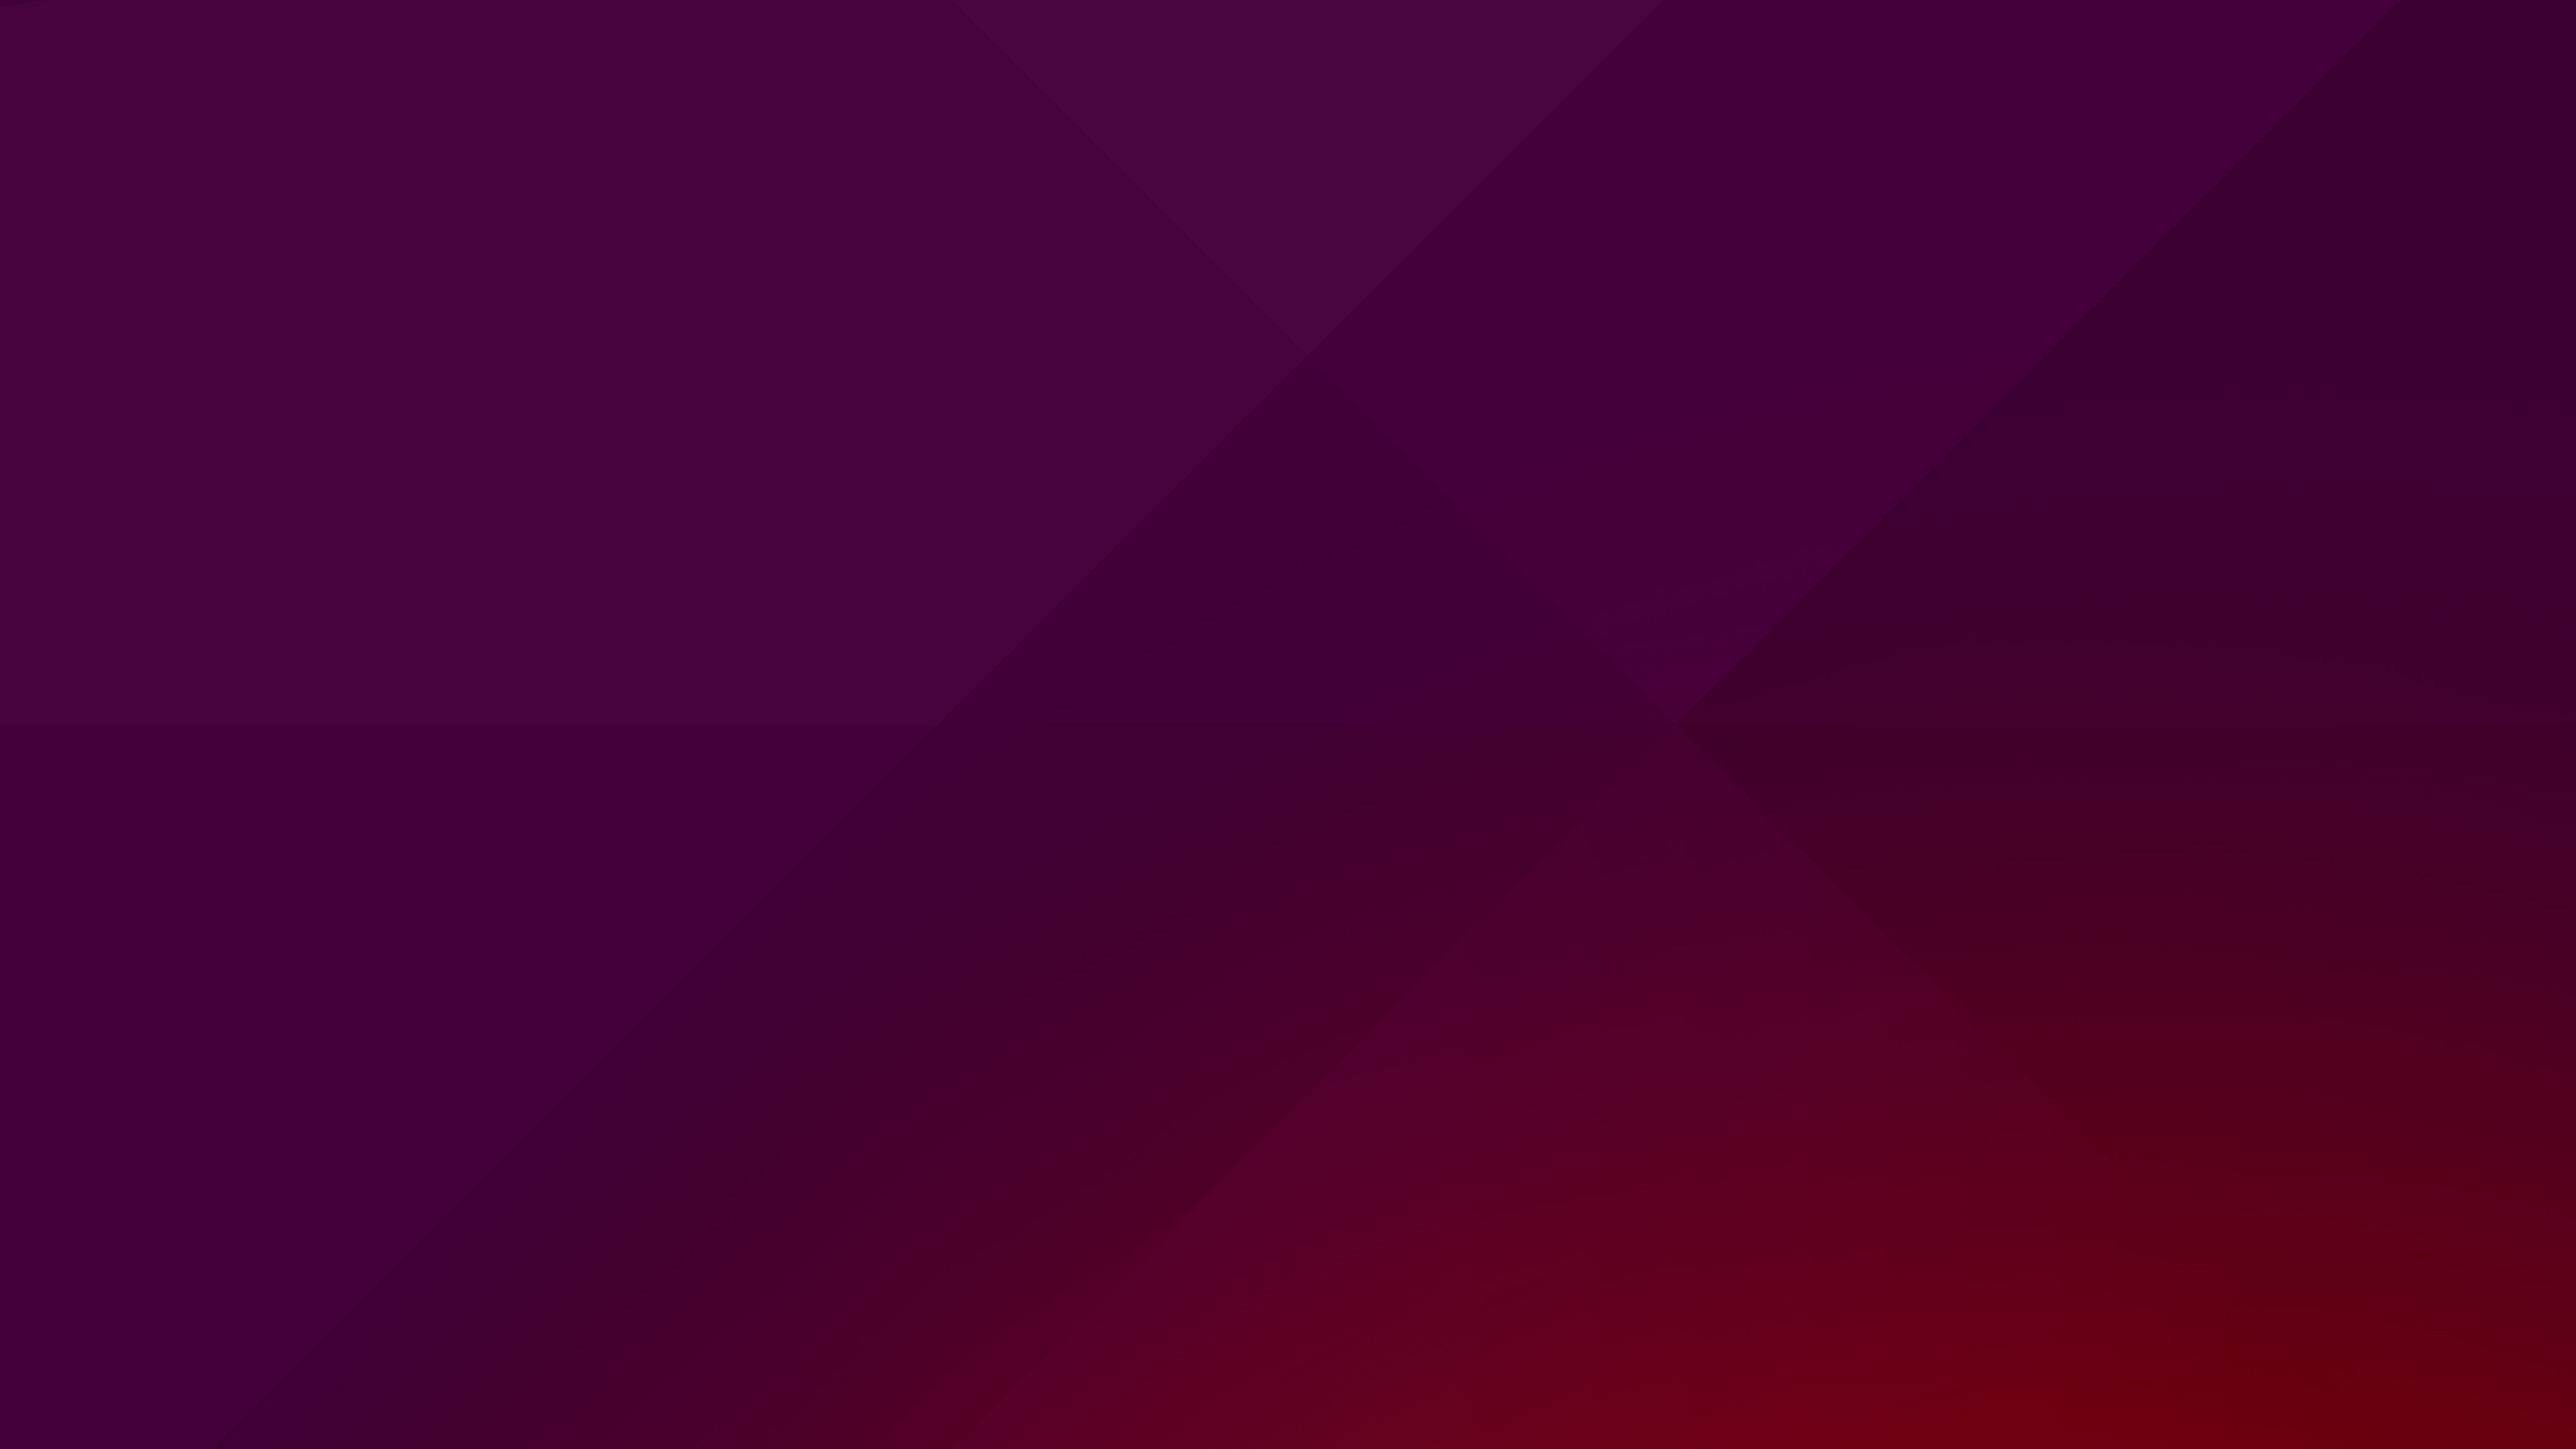 Meet The New Default Wallpaper Of Ubuntu Omg